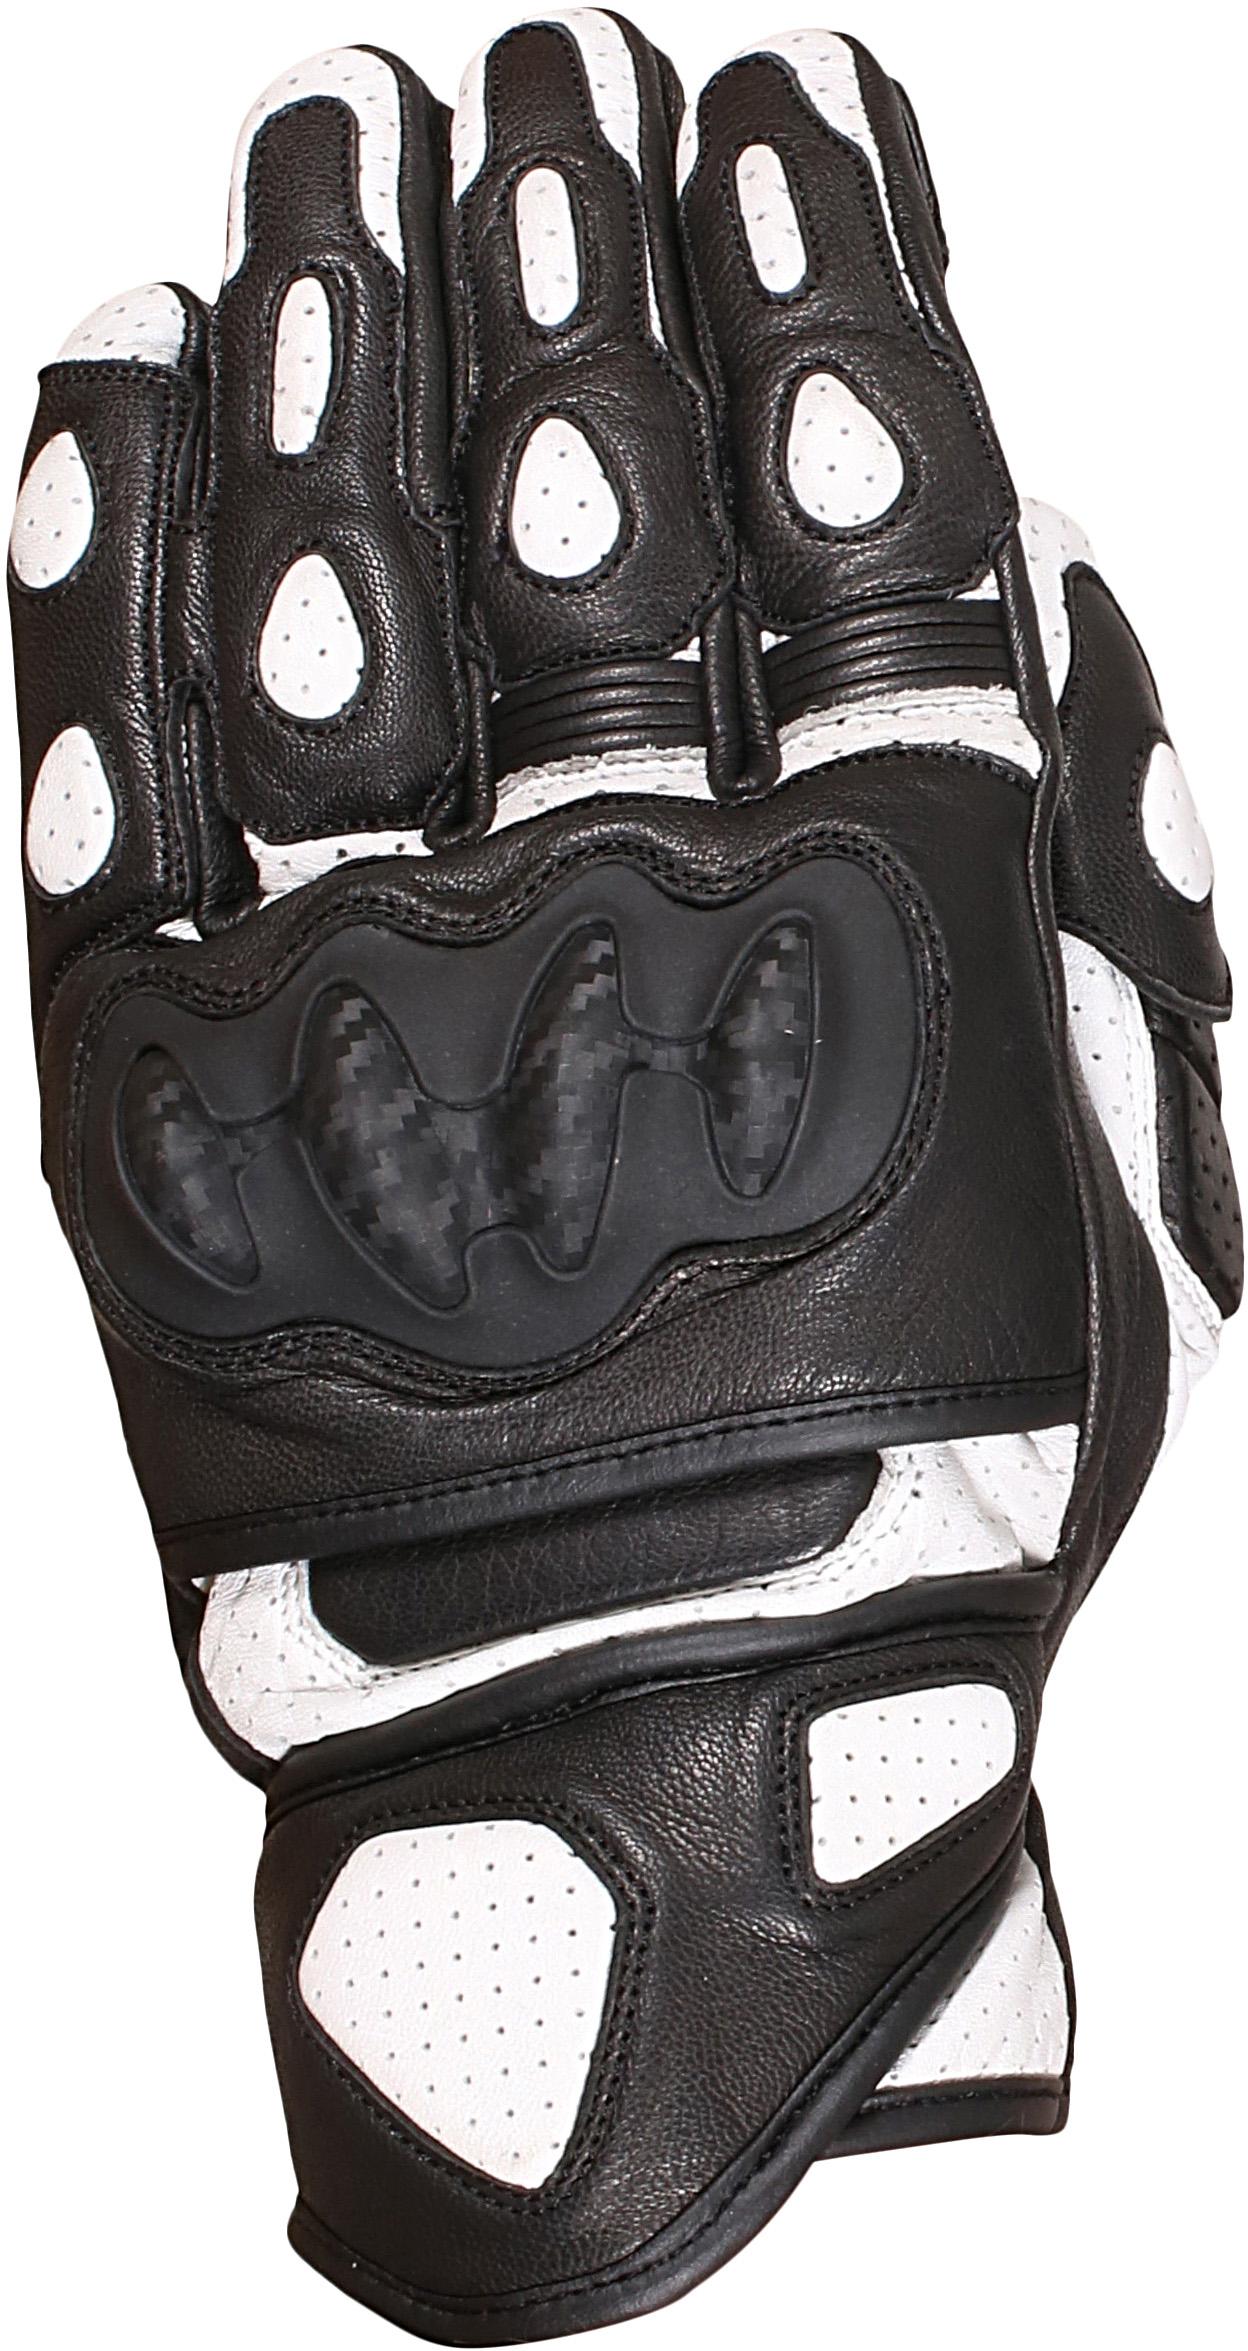 Weise Apex Motorcycle Gloves - Black/White, 3Xl